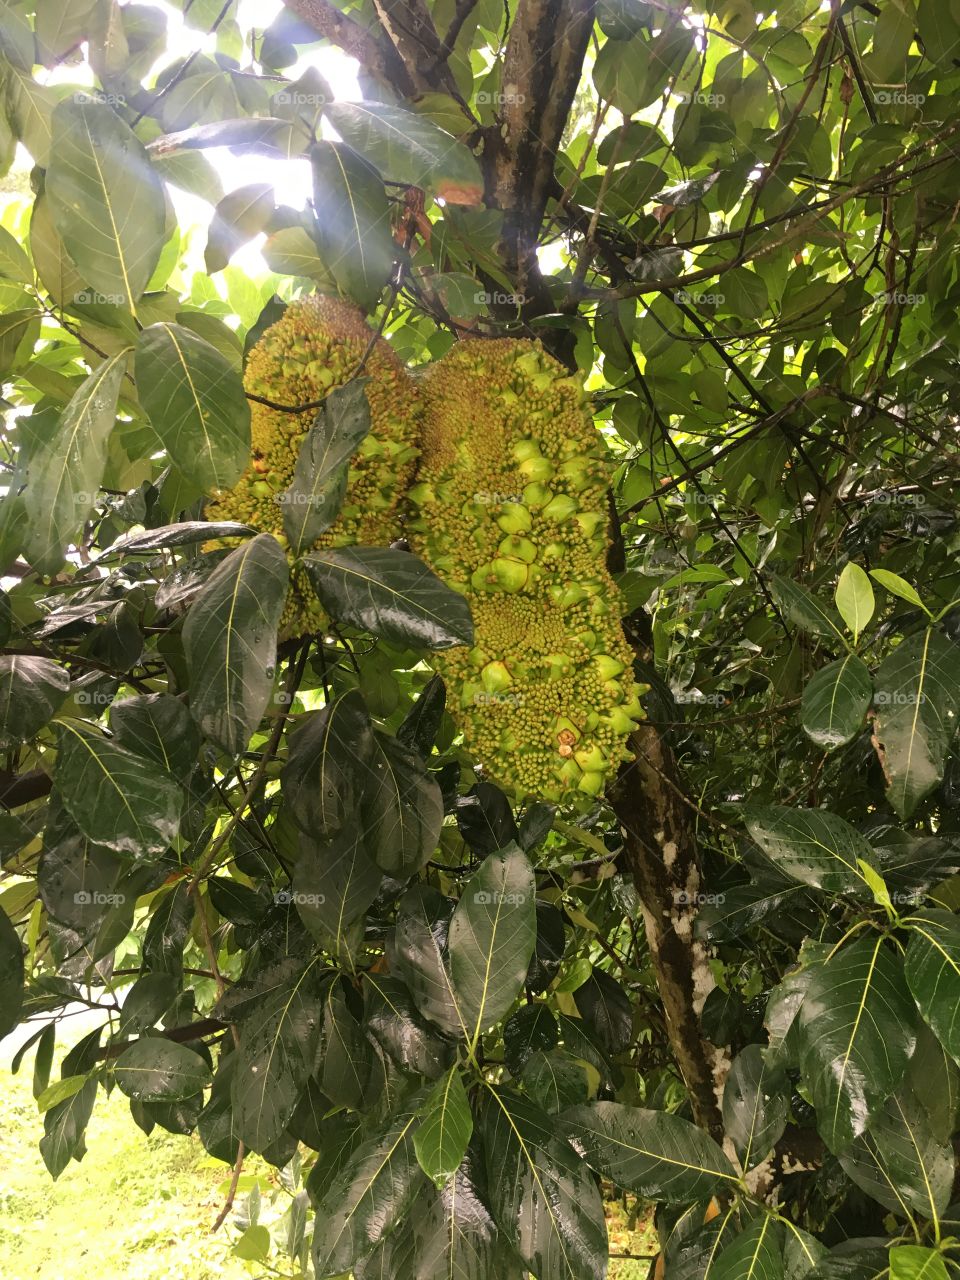 rare fruit jackfruit from Indonesia at mekarsari cibubur